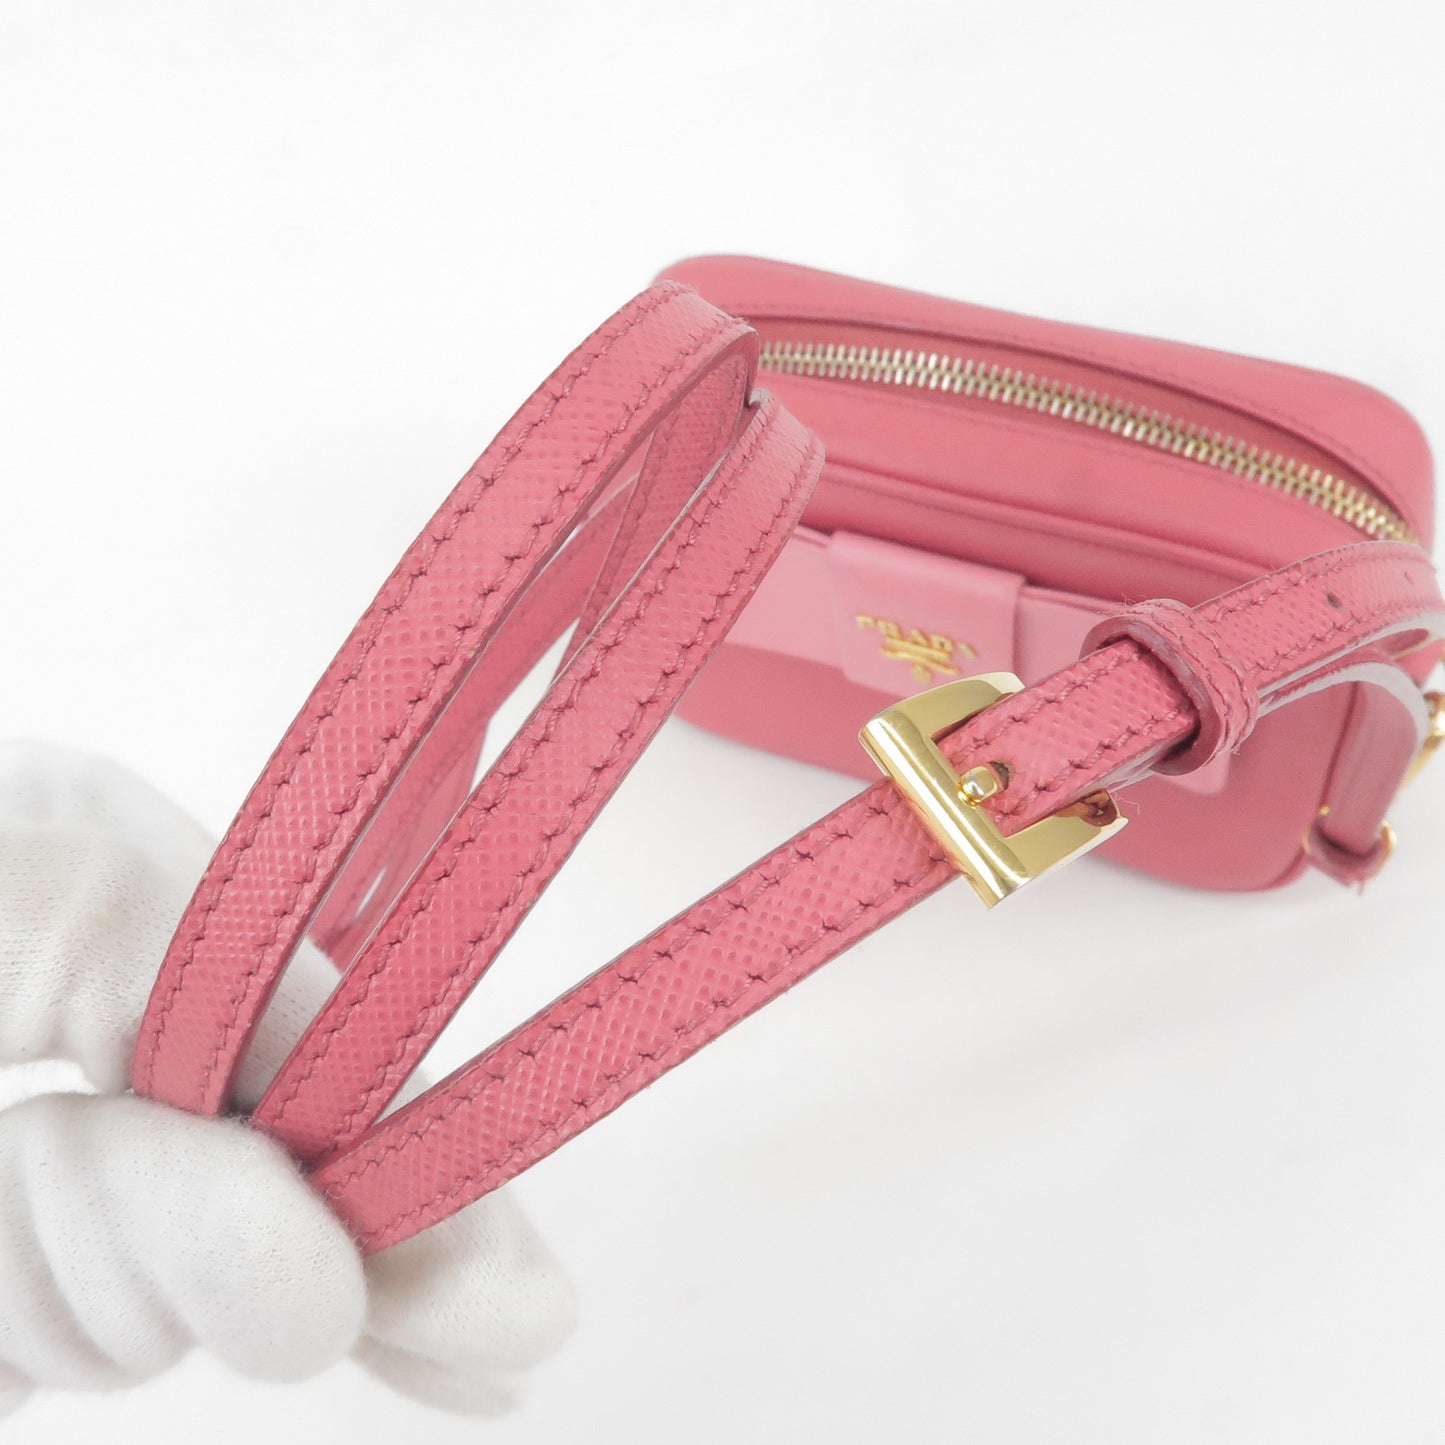 PRADA Bow Ribbon Leather Shoulder Bag Purse Pink